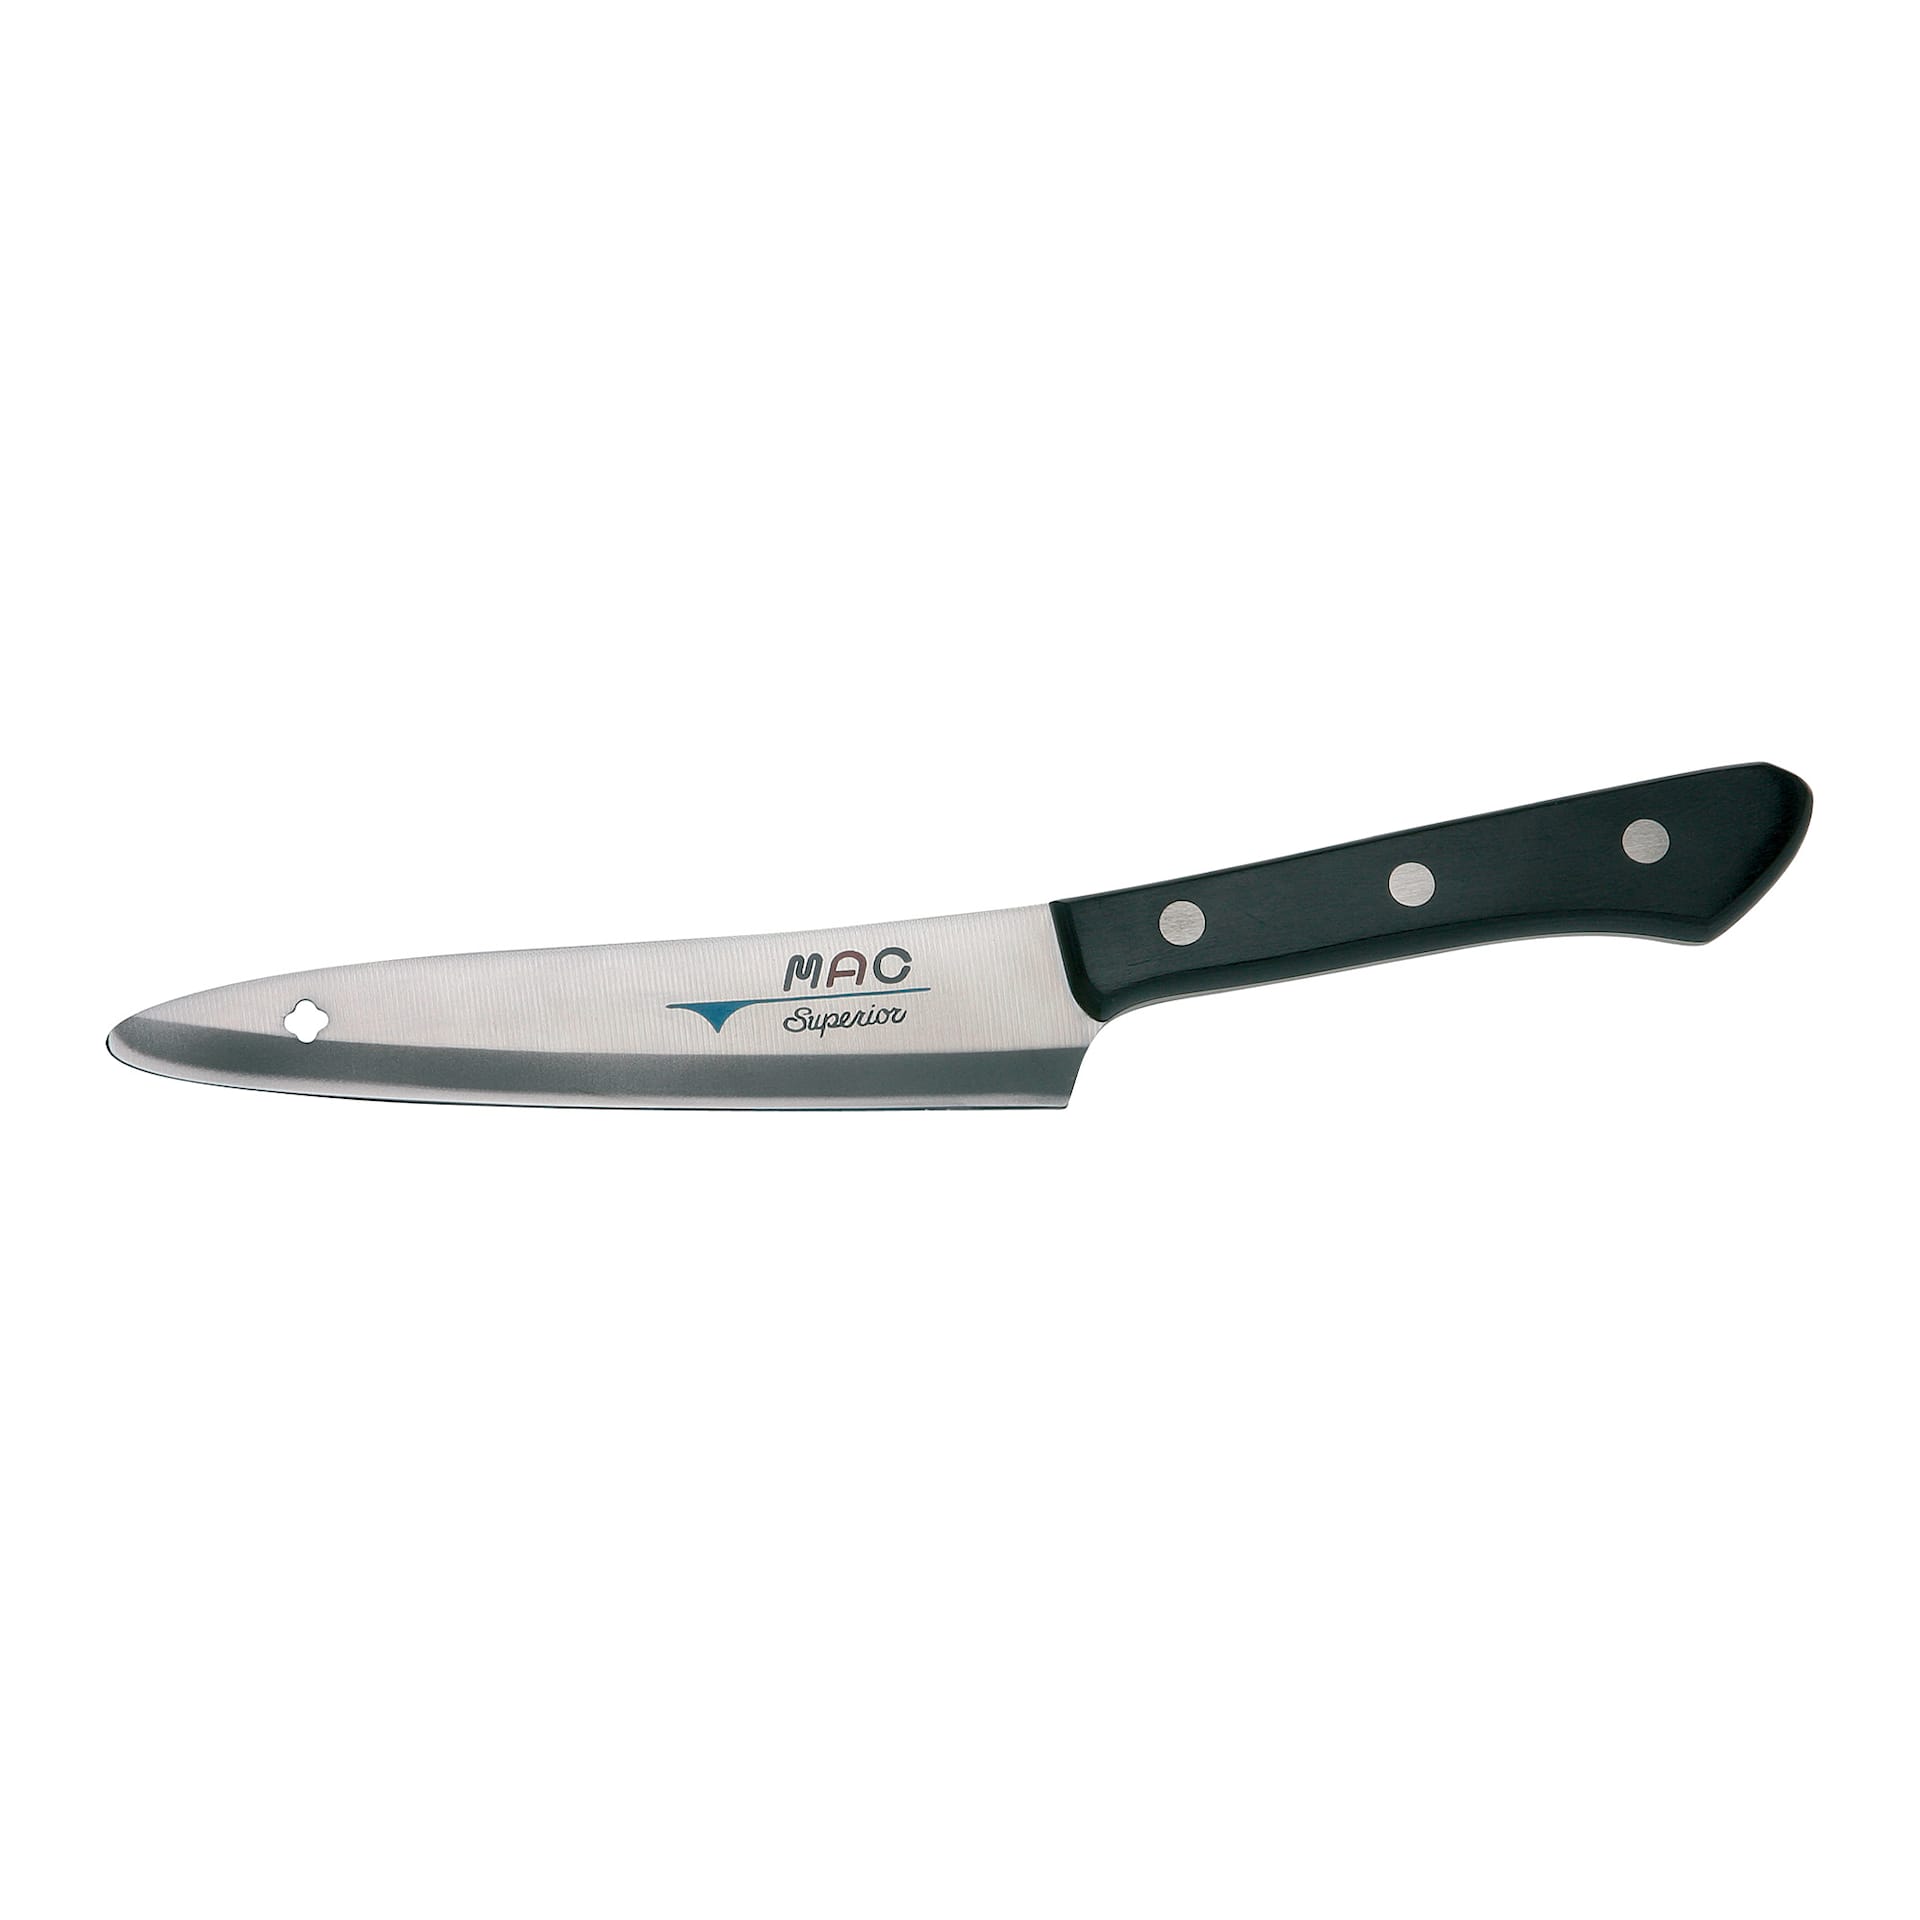 Superior - Vegetable knife, 12.5 cm - MAC - NO GA